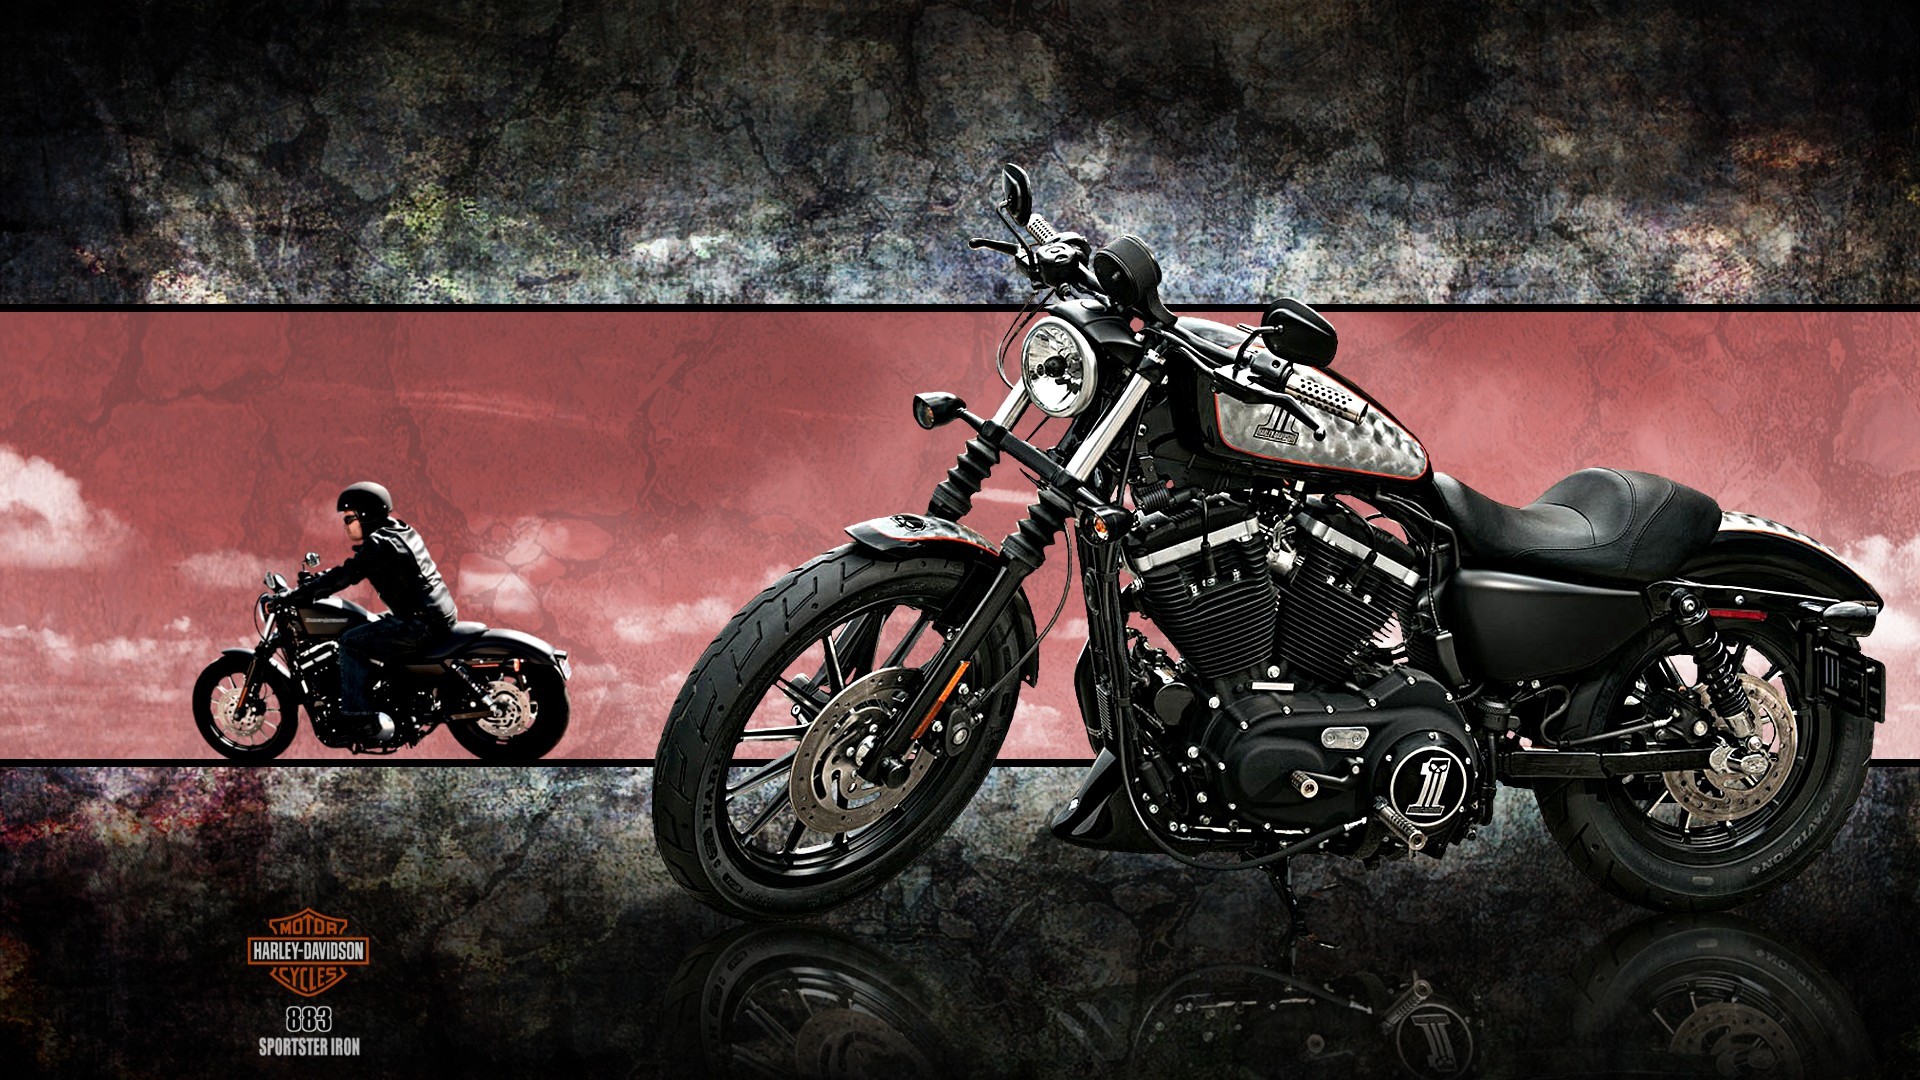 Harley Davidson Xl883n Hd Wallpaper 999hdwallpaper 1920x1080